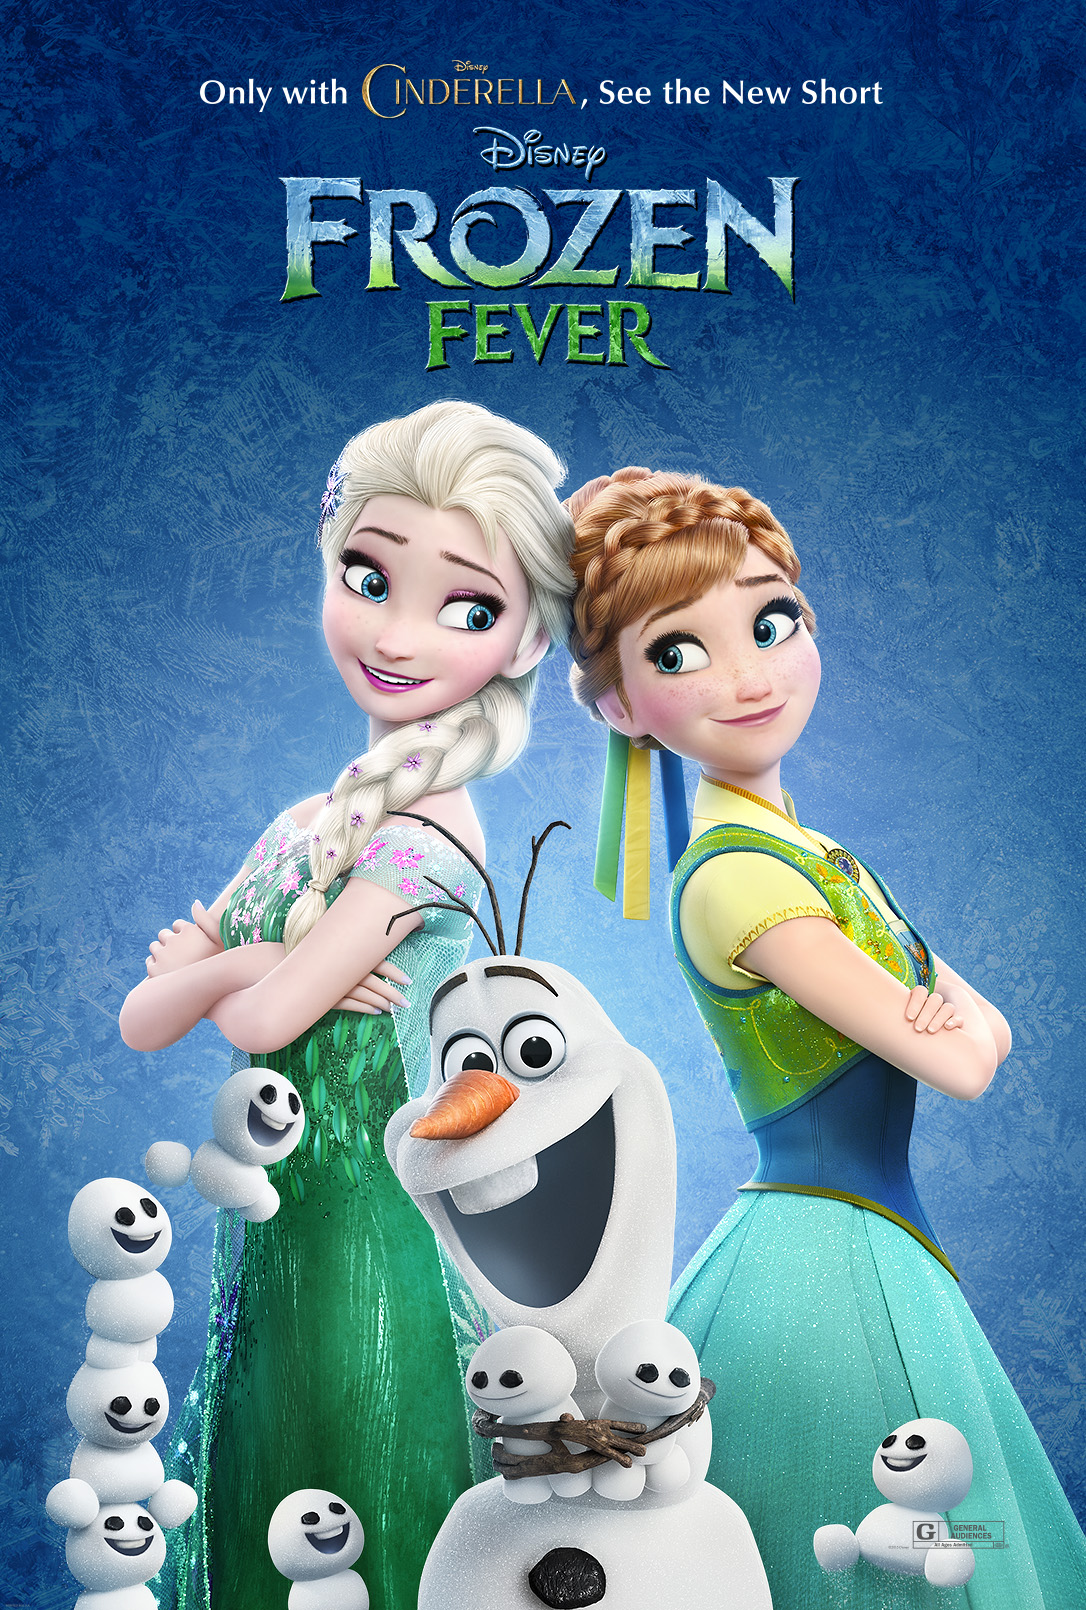 Frozen 3 Theory: Elsa's Love Interest Has Already Been Introduced - IMDb